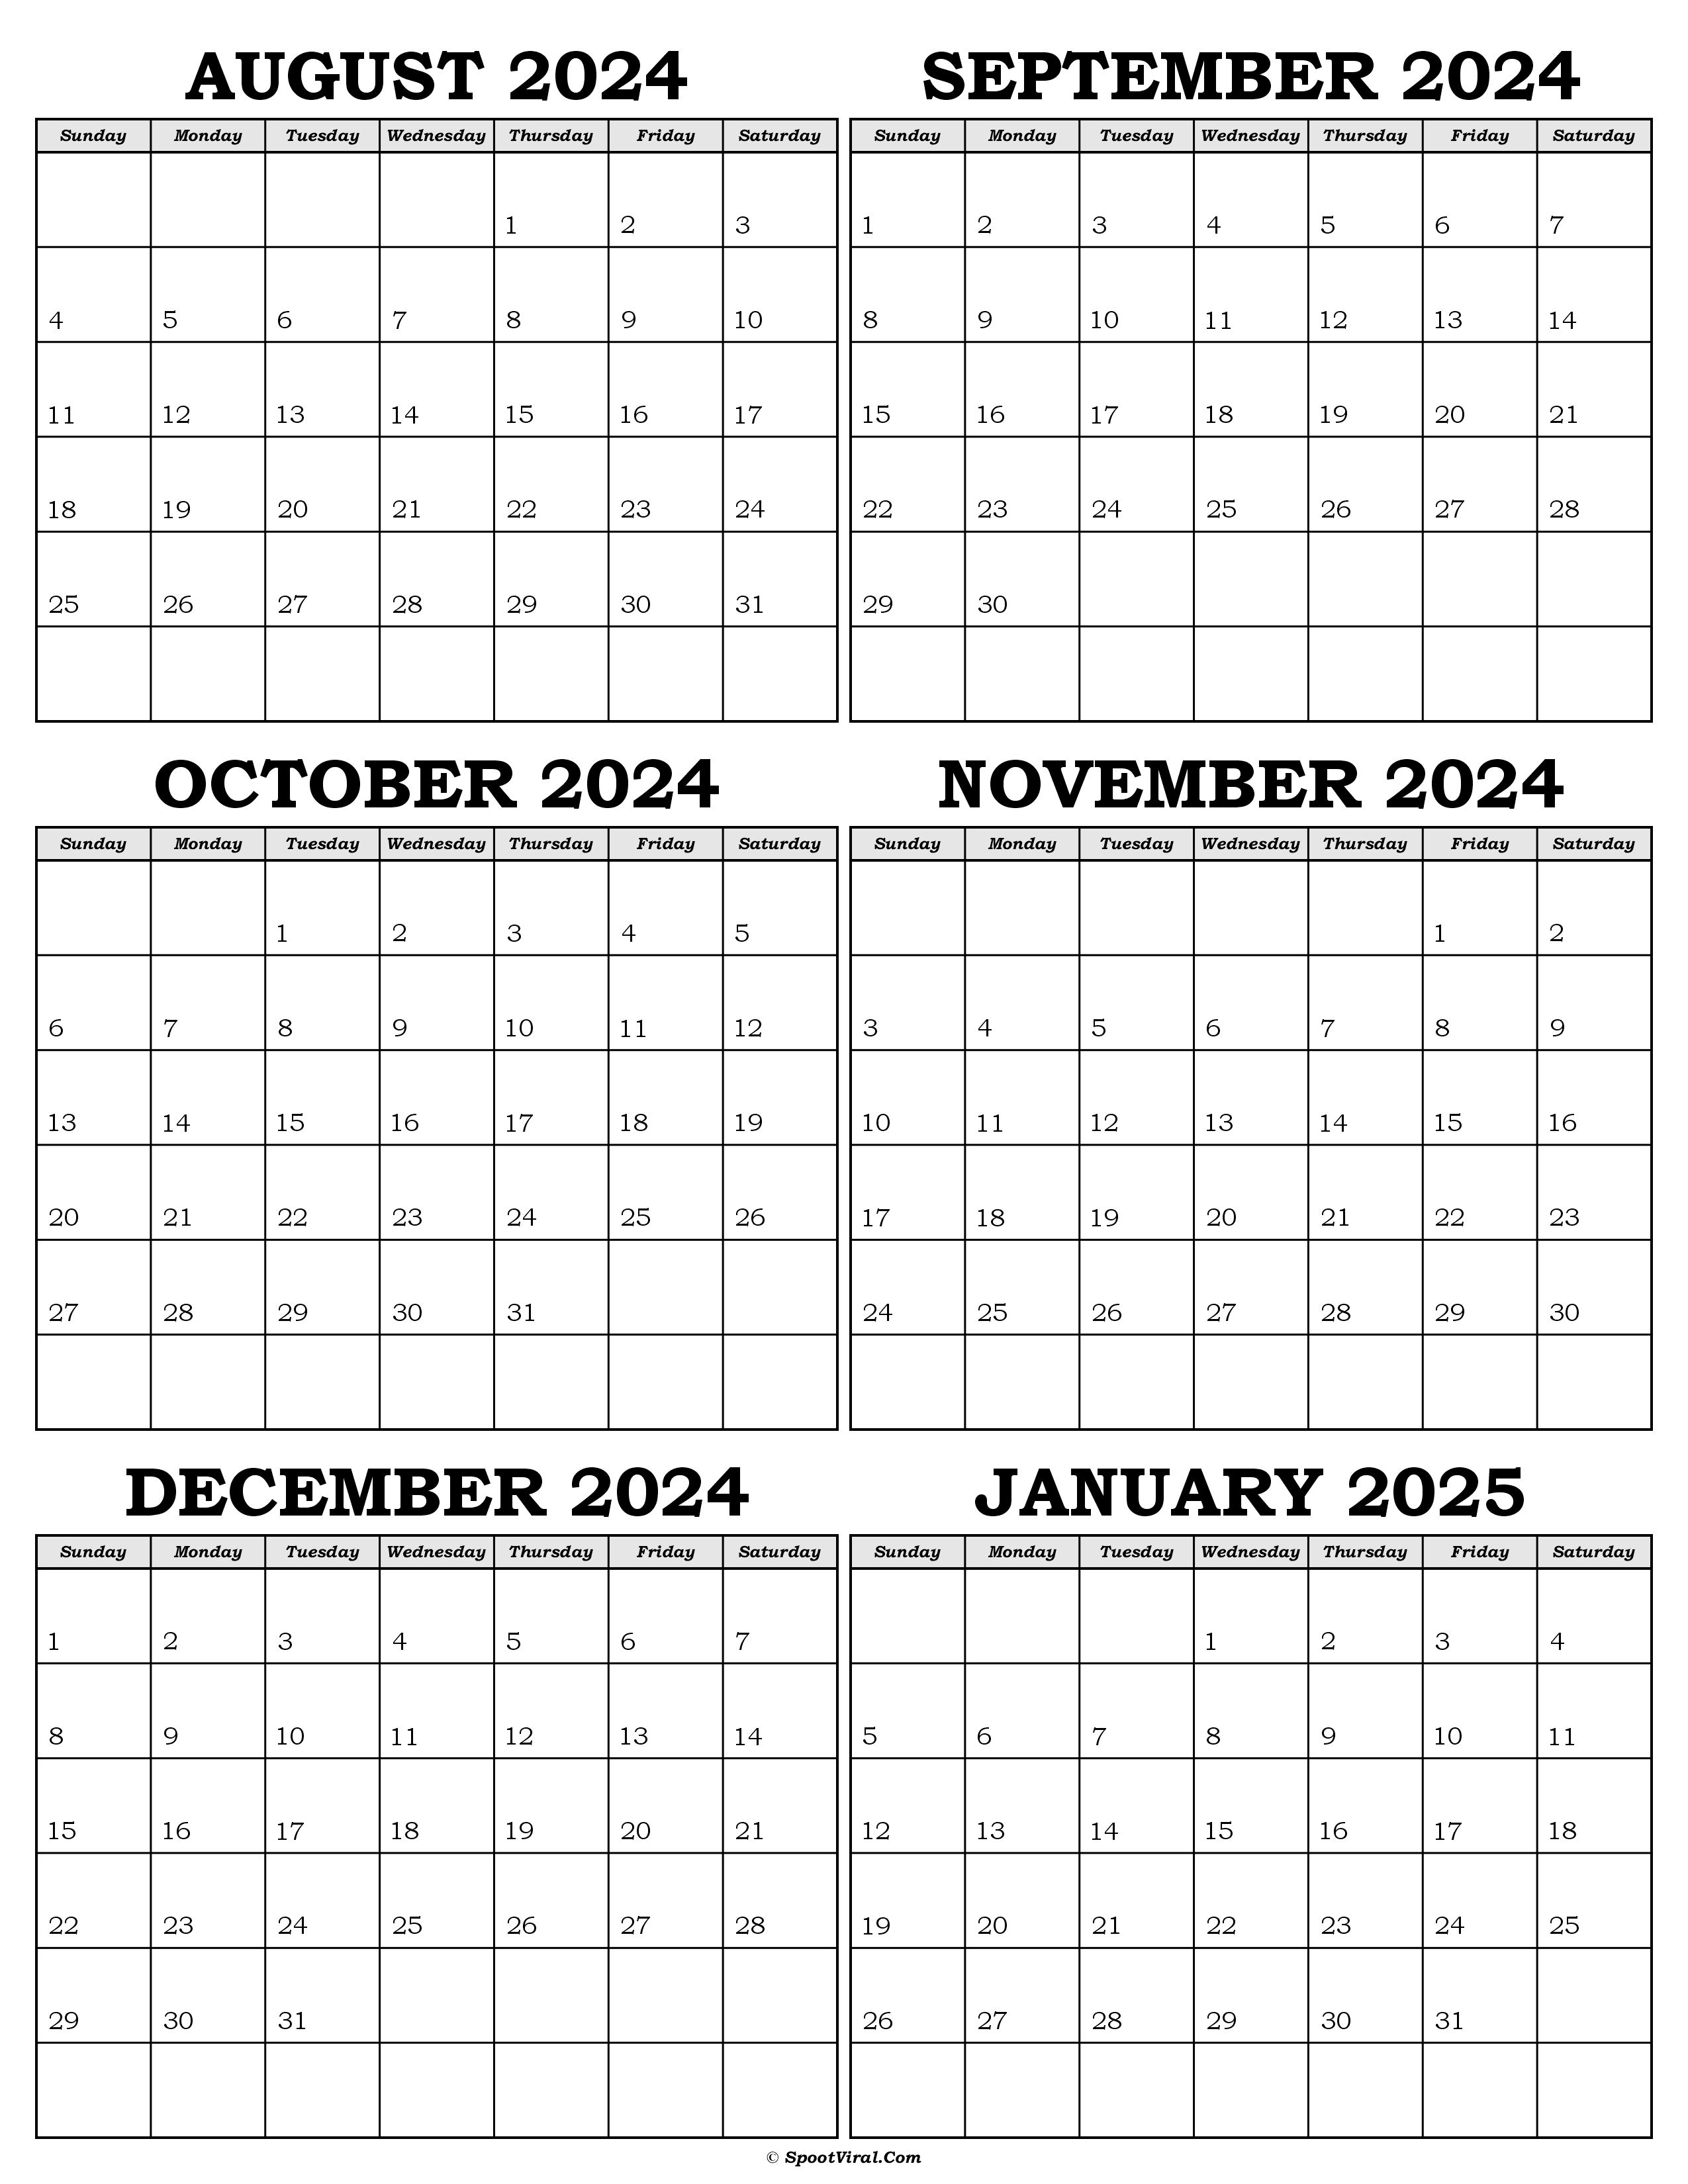 Calendar August 2024 to January 2025